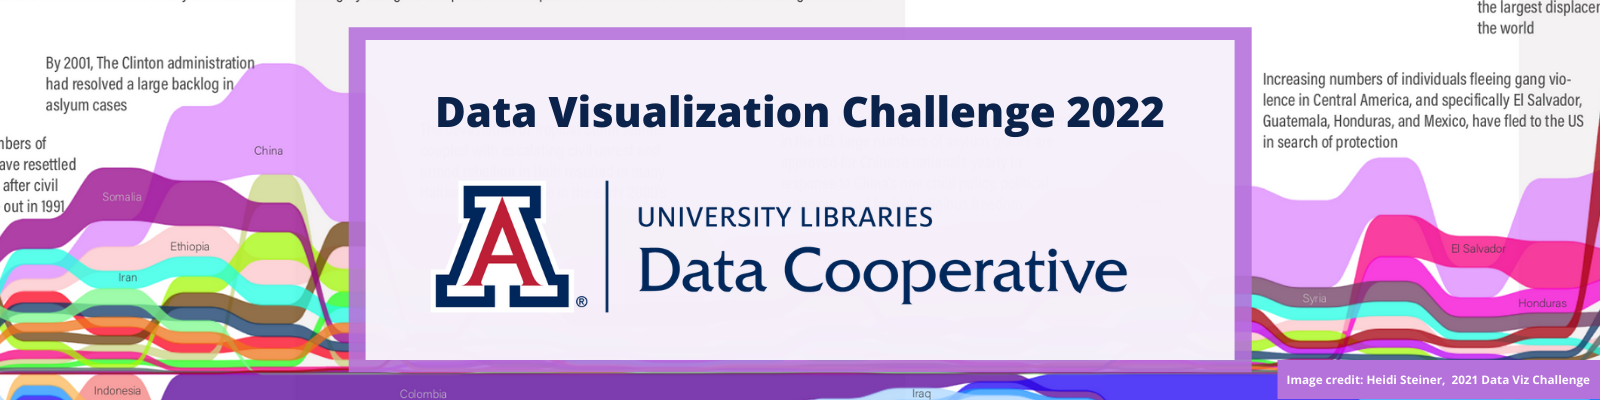 Data Visualization Challenge